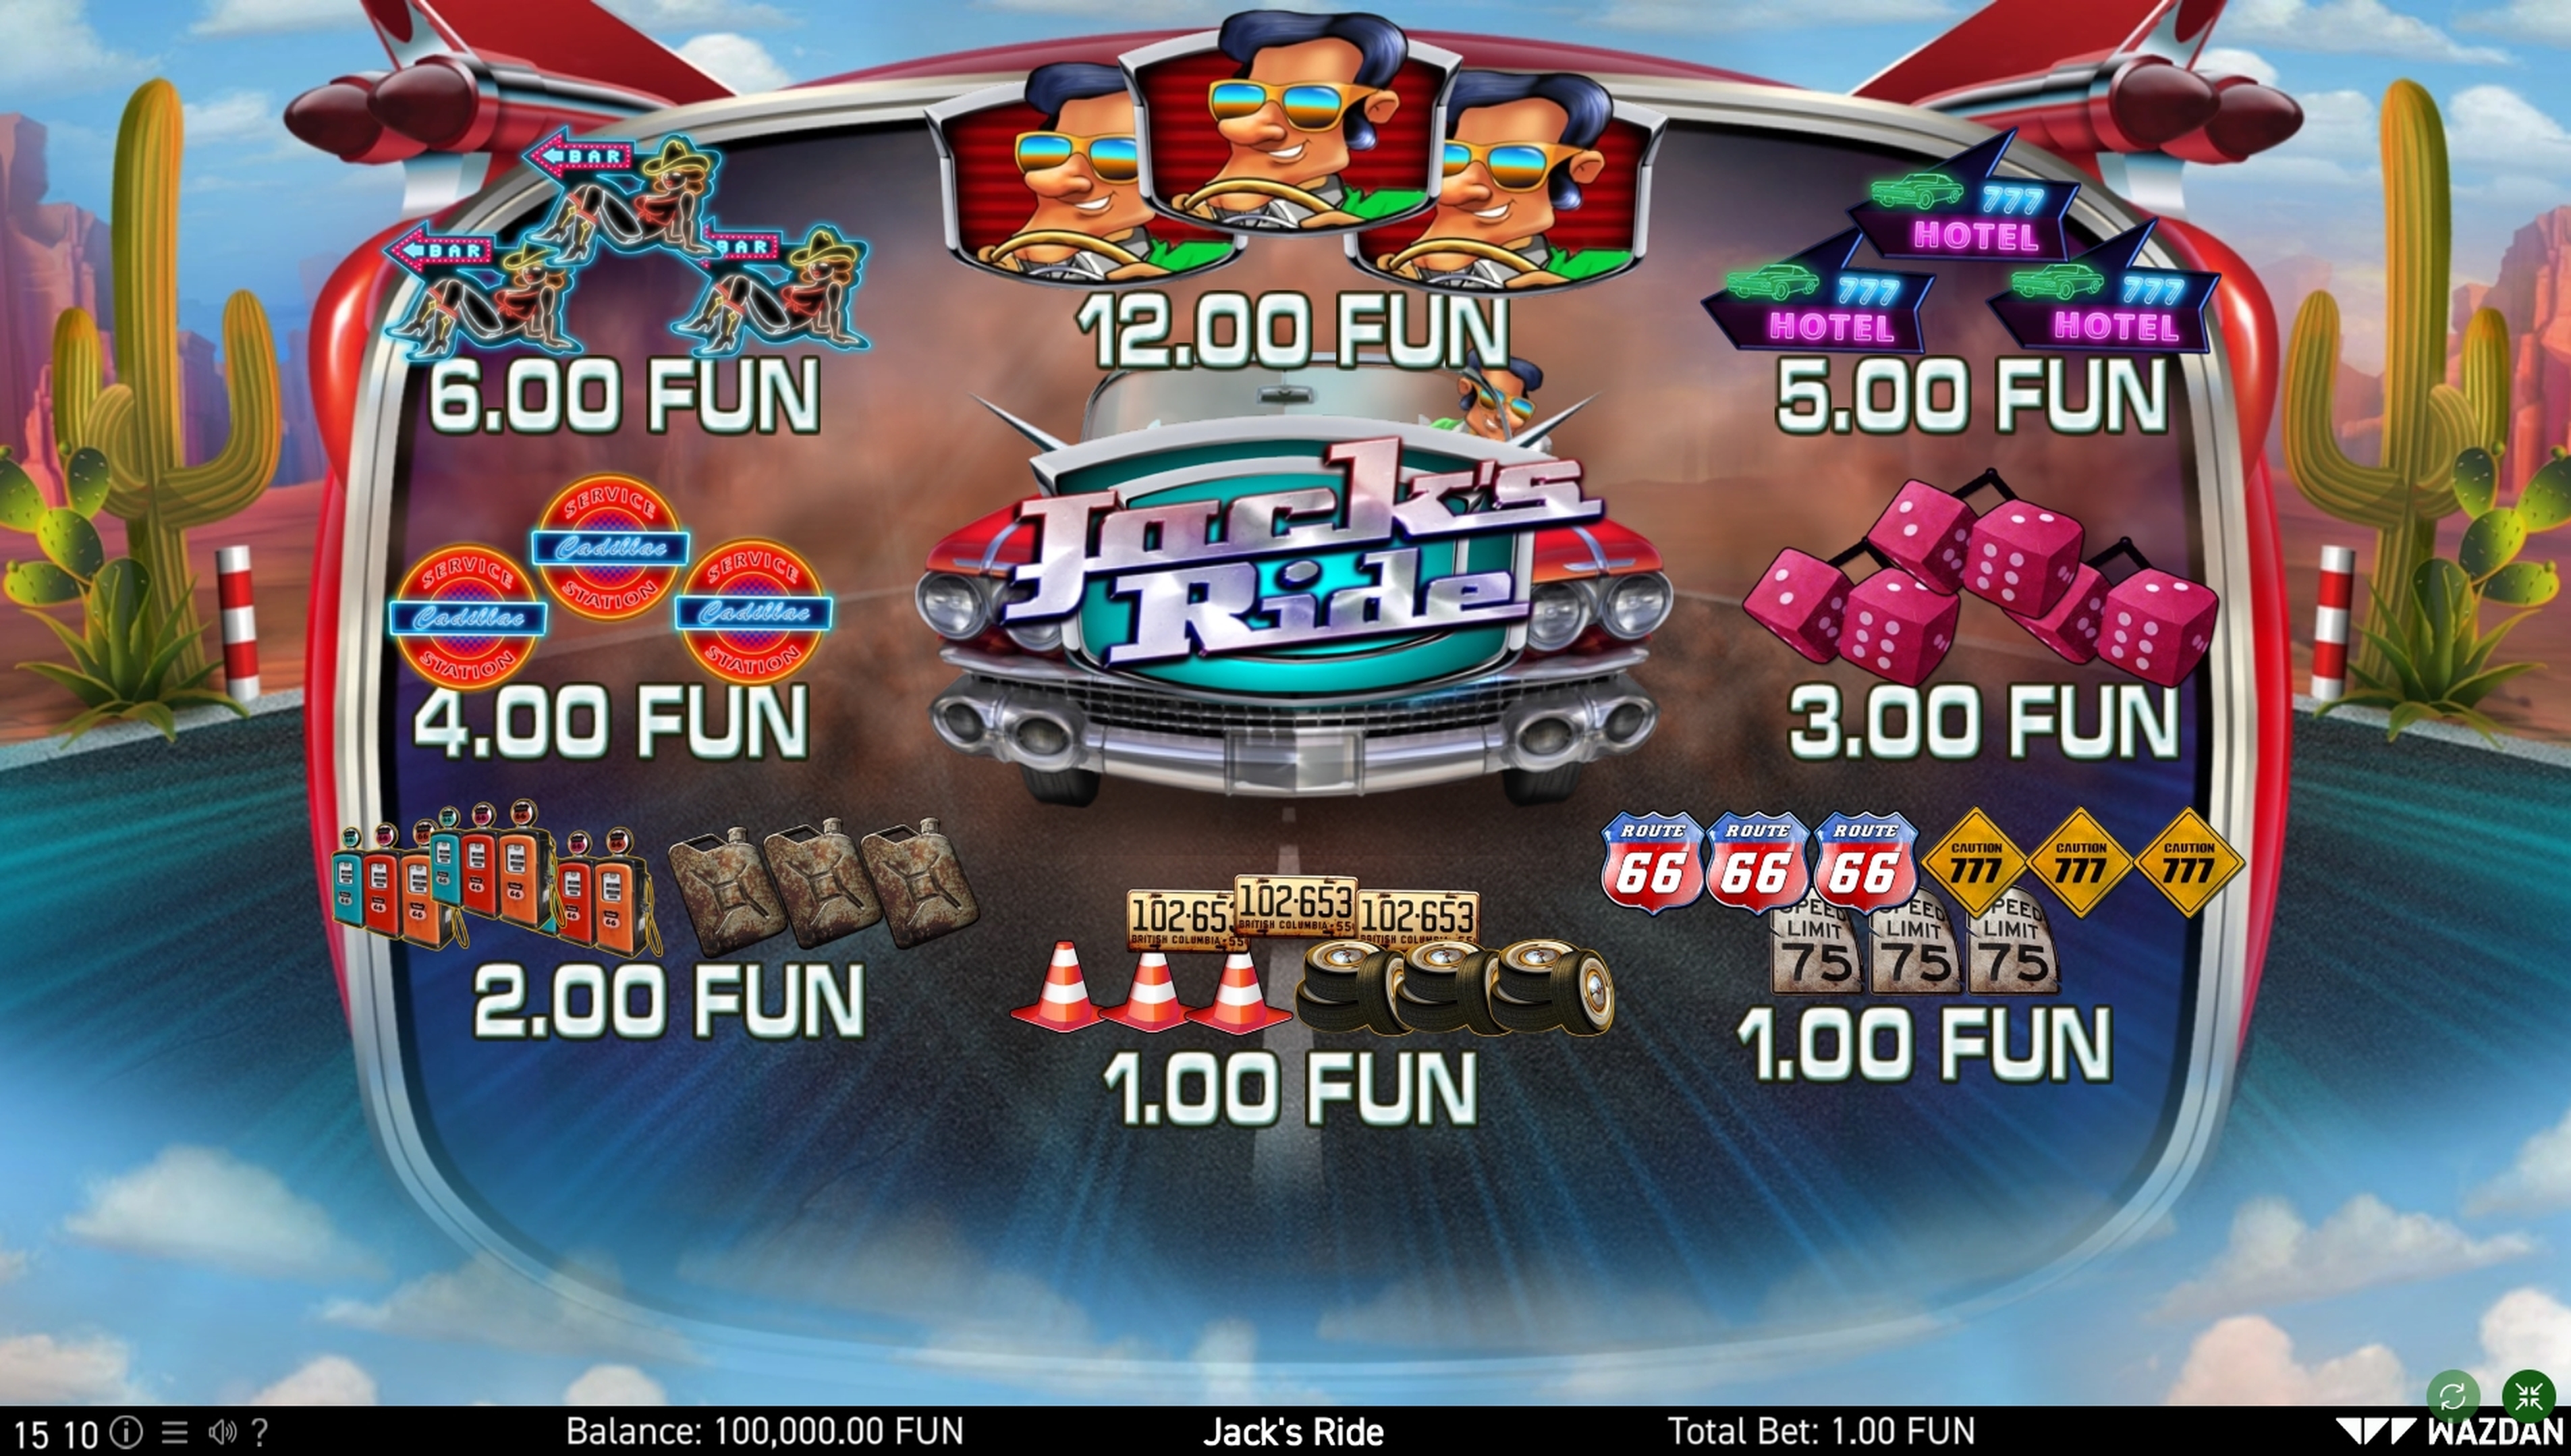 Info of Jack's Ride Slot Game by Wazdan